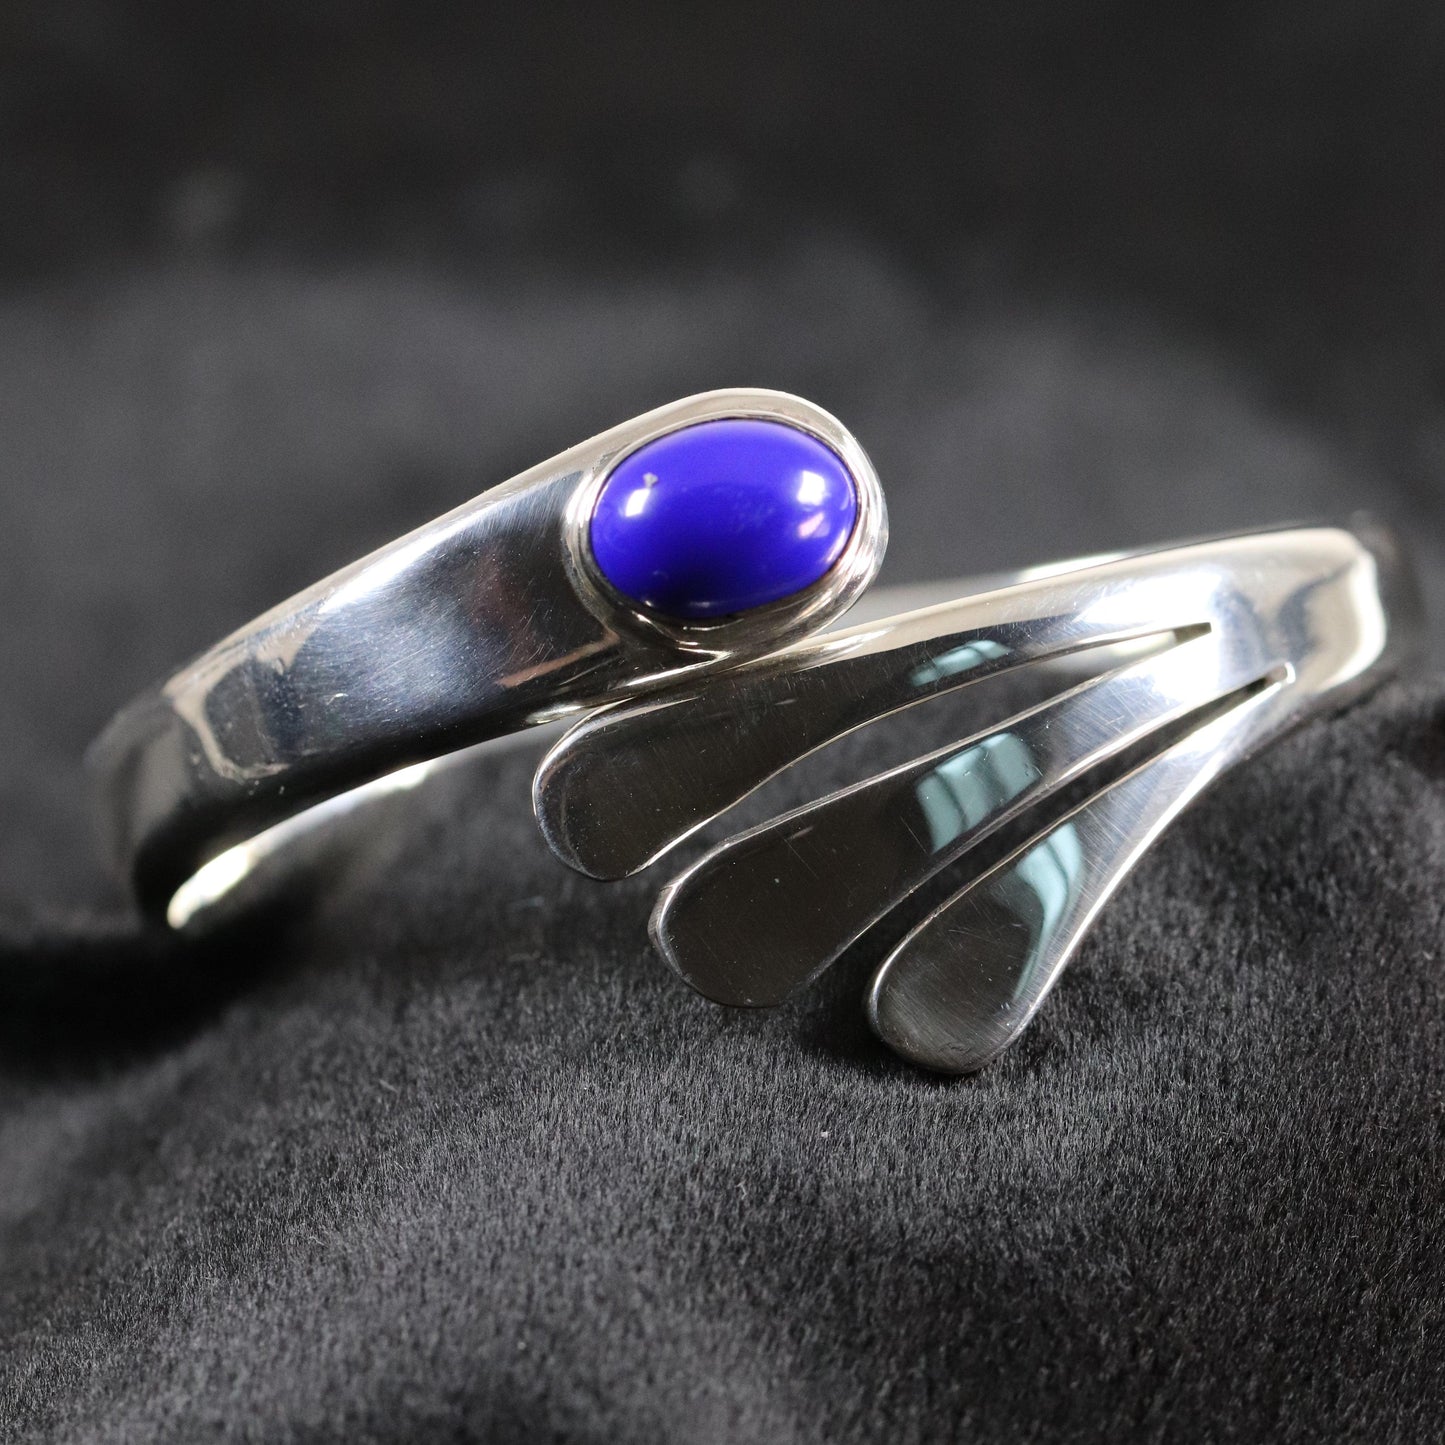 Vintage Silver Mexican Jewelry | Lapis Lazuli Modernist Bracelet - Carmel Fine Silver Jewelry